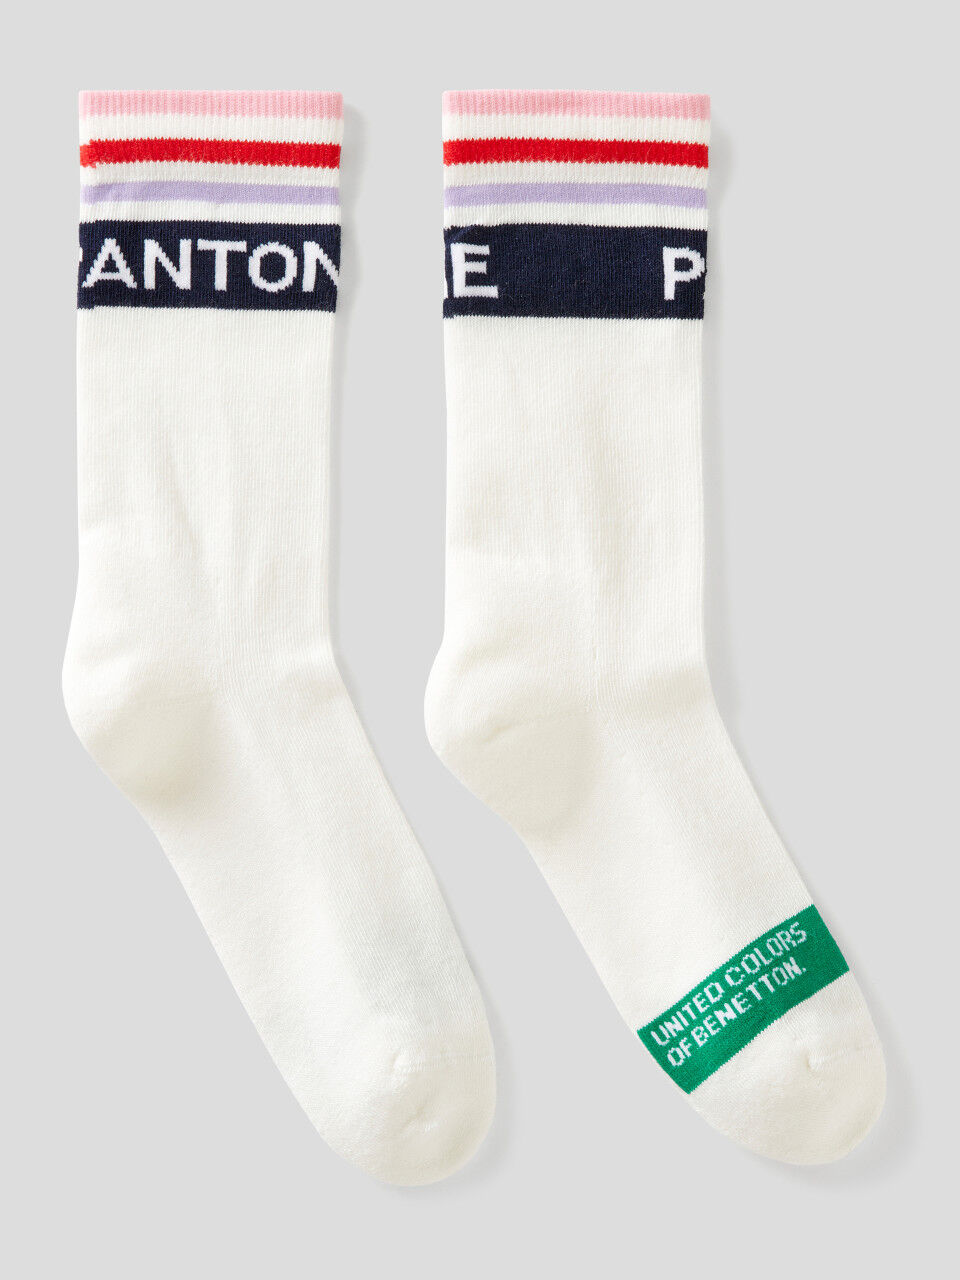 BenettonxPantone™ white socks